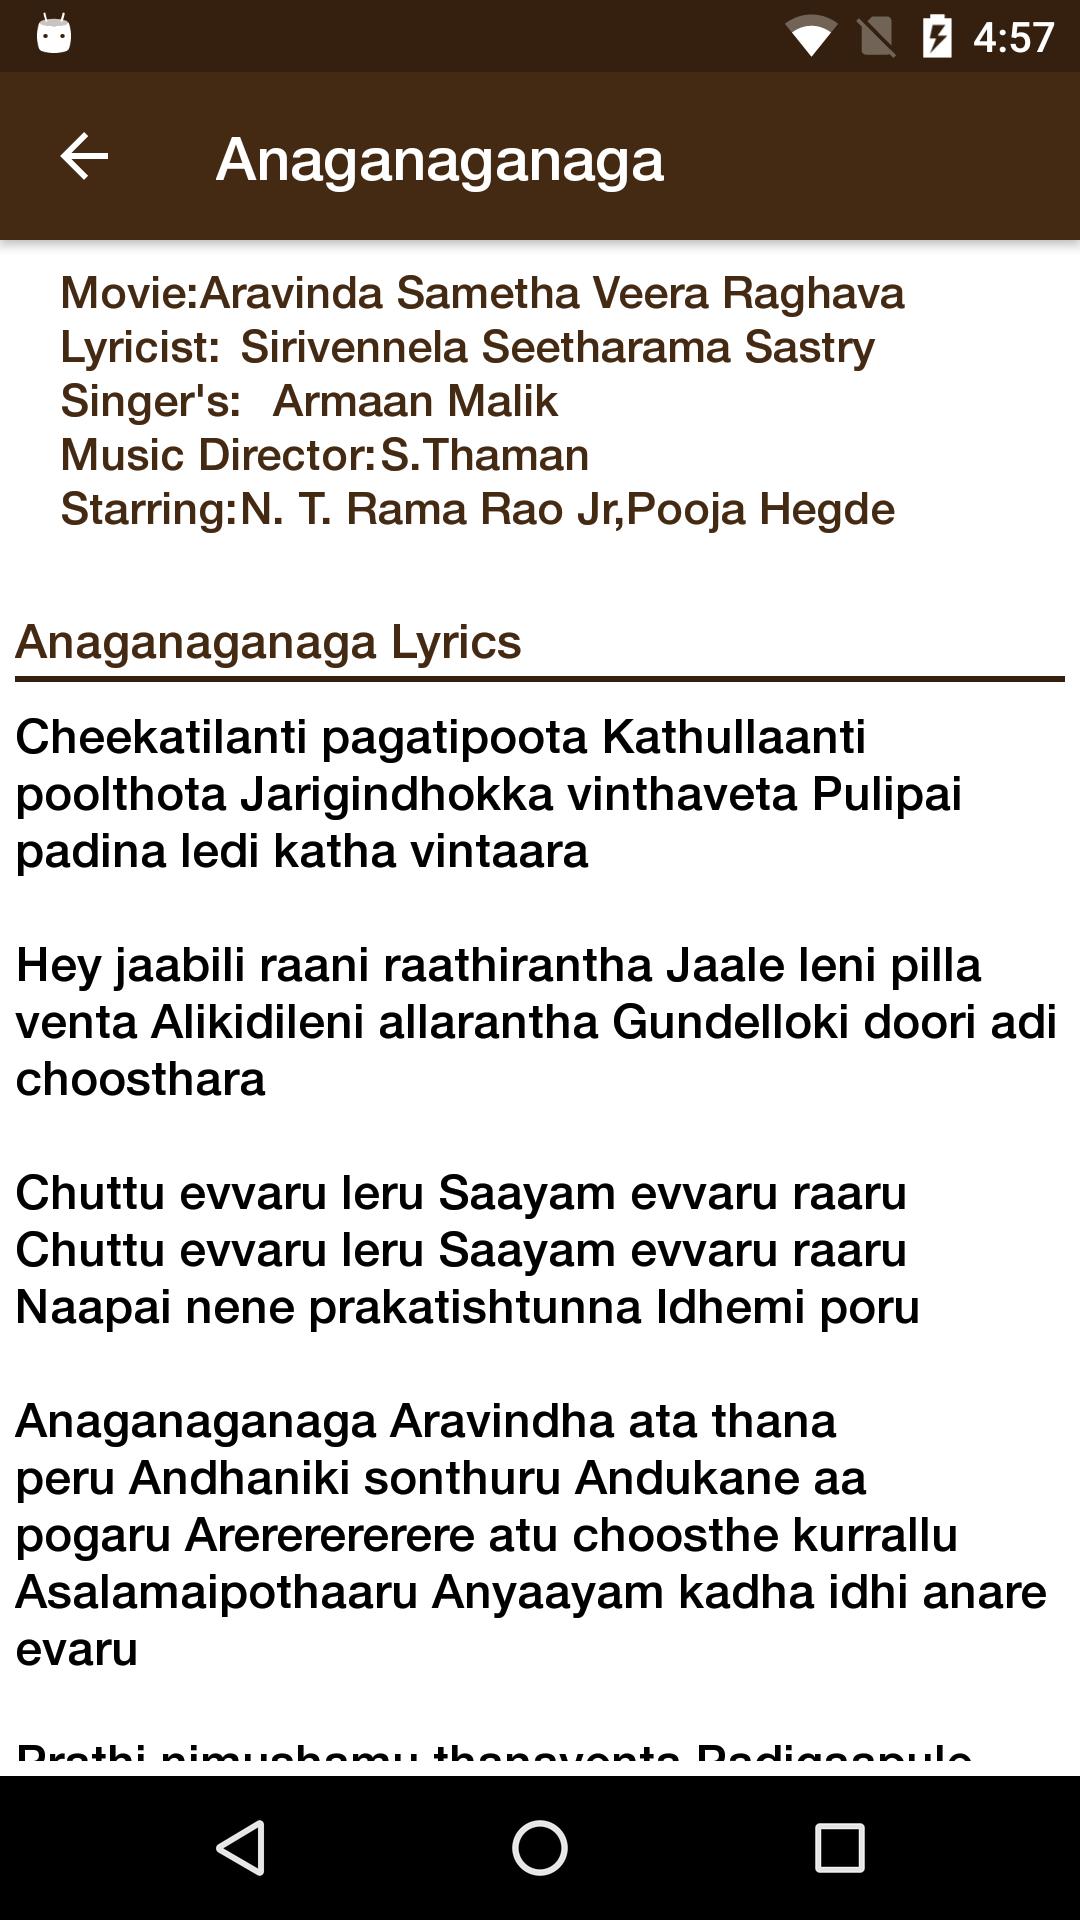 Aravindha Sametha Video Songs For Android Apk Download Peniviti karaoke song with telugu lyrics from aravinda sametha, peniviti song lyrics from film aravindha sametha veera. aravindha sametha video songs for